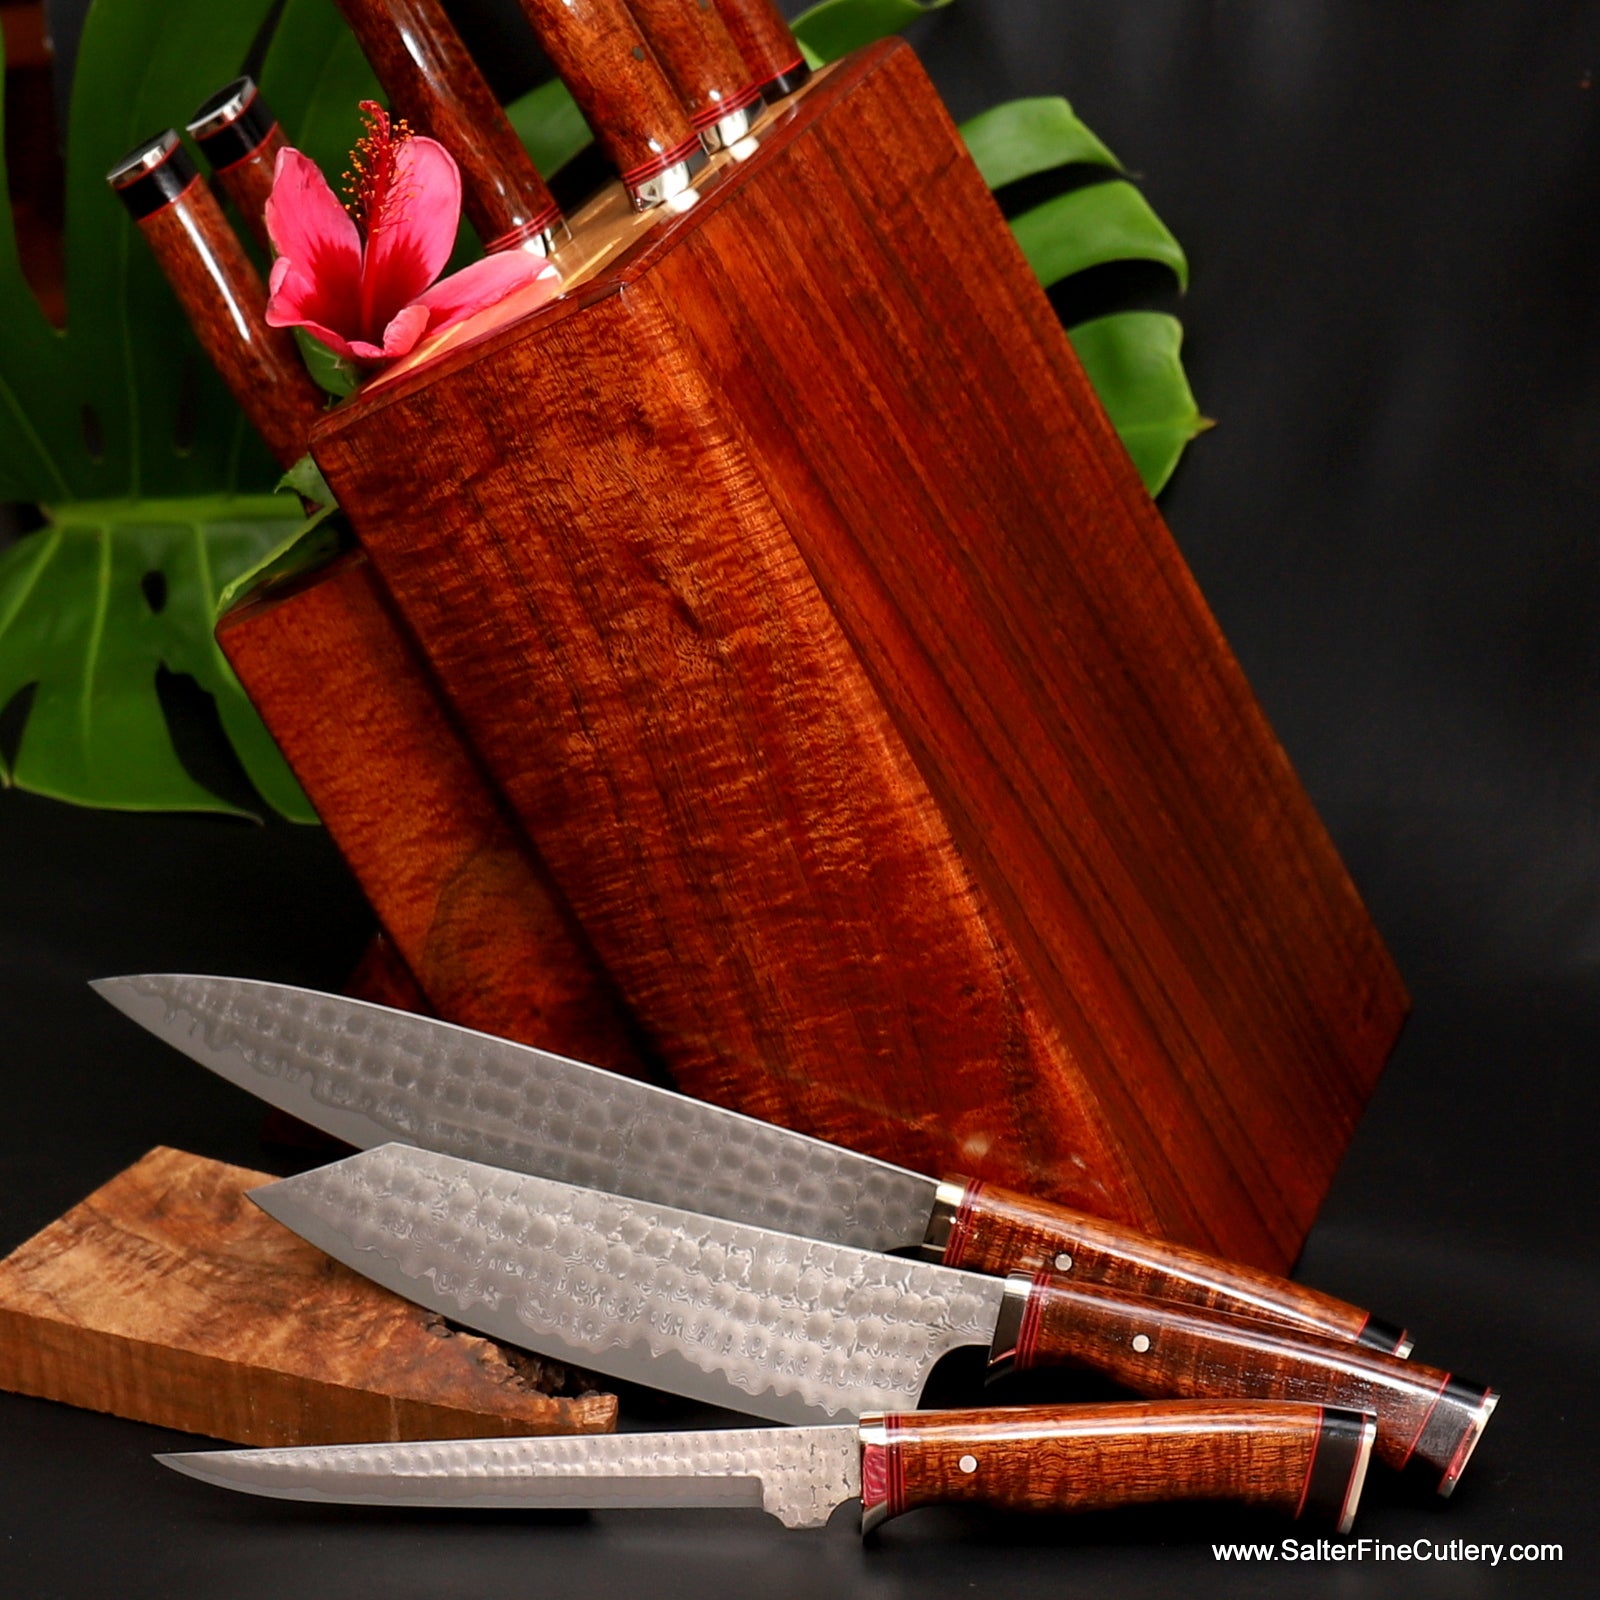 https://cdn.shopify.com/s/files/1/0993/8330/files/9-piece_beautiful_luxury_handmade_chef_knife_set_in_koa_wood_knife_block_by_Salter_Fine_Cutlery_of_Hawaii.jpg?v=1604801789